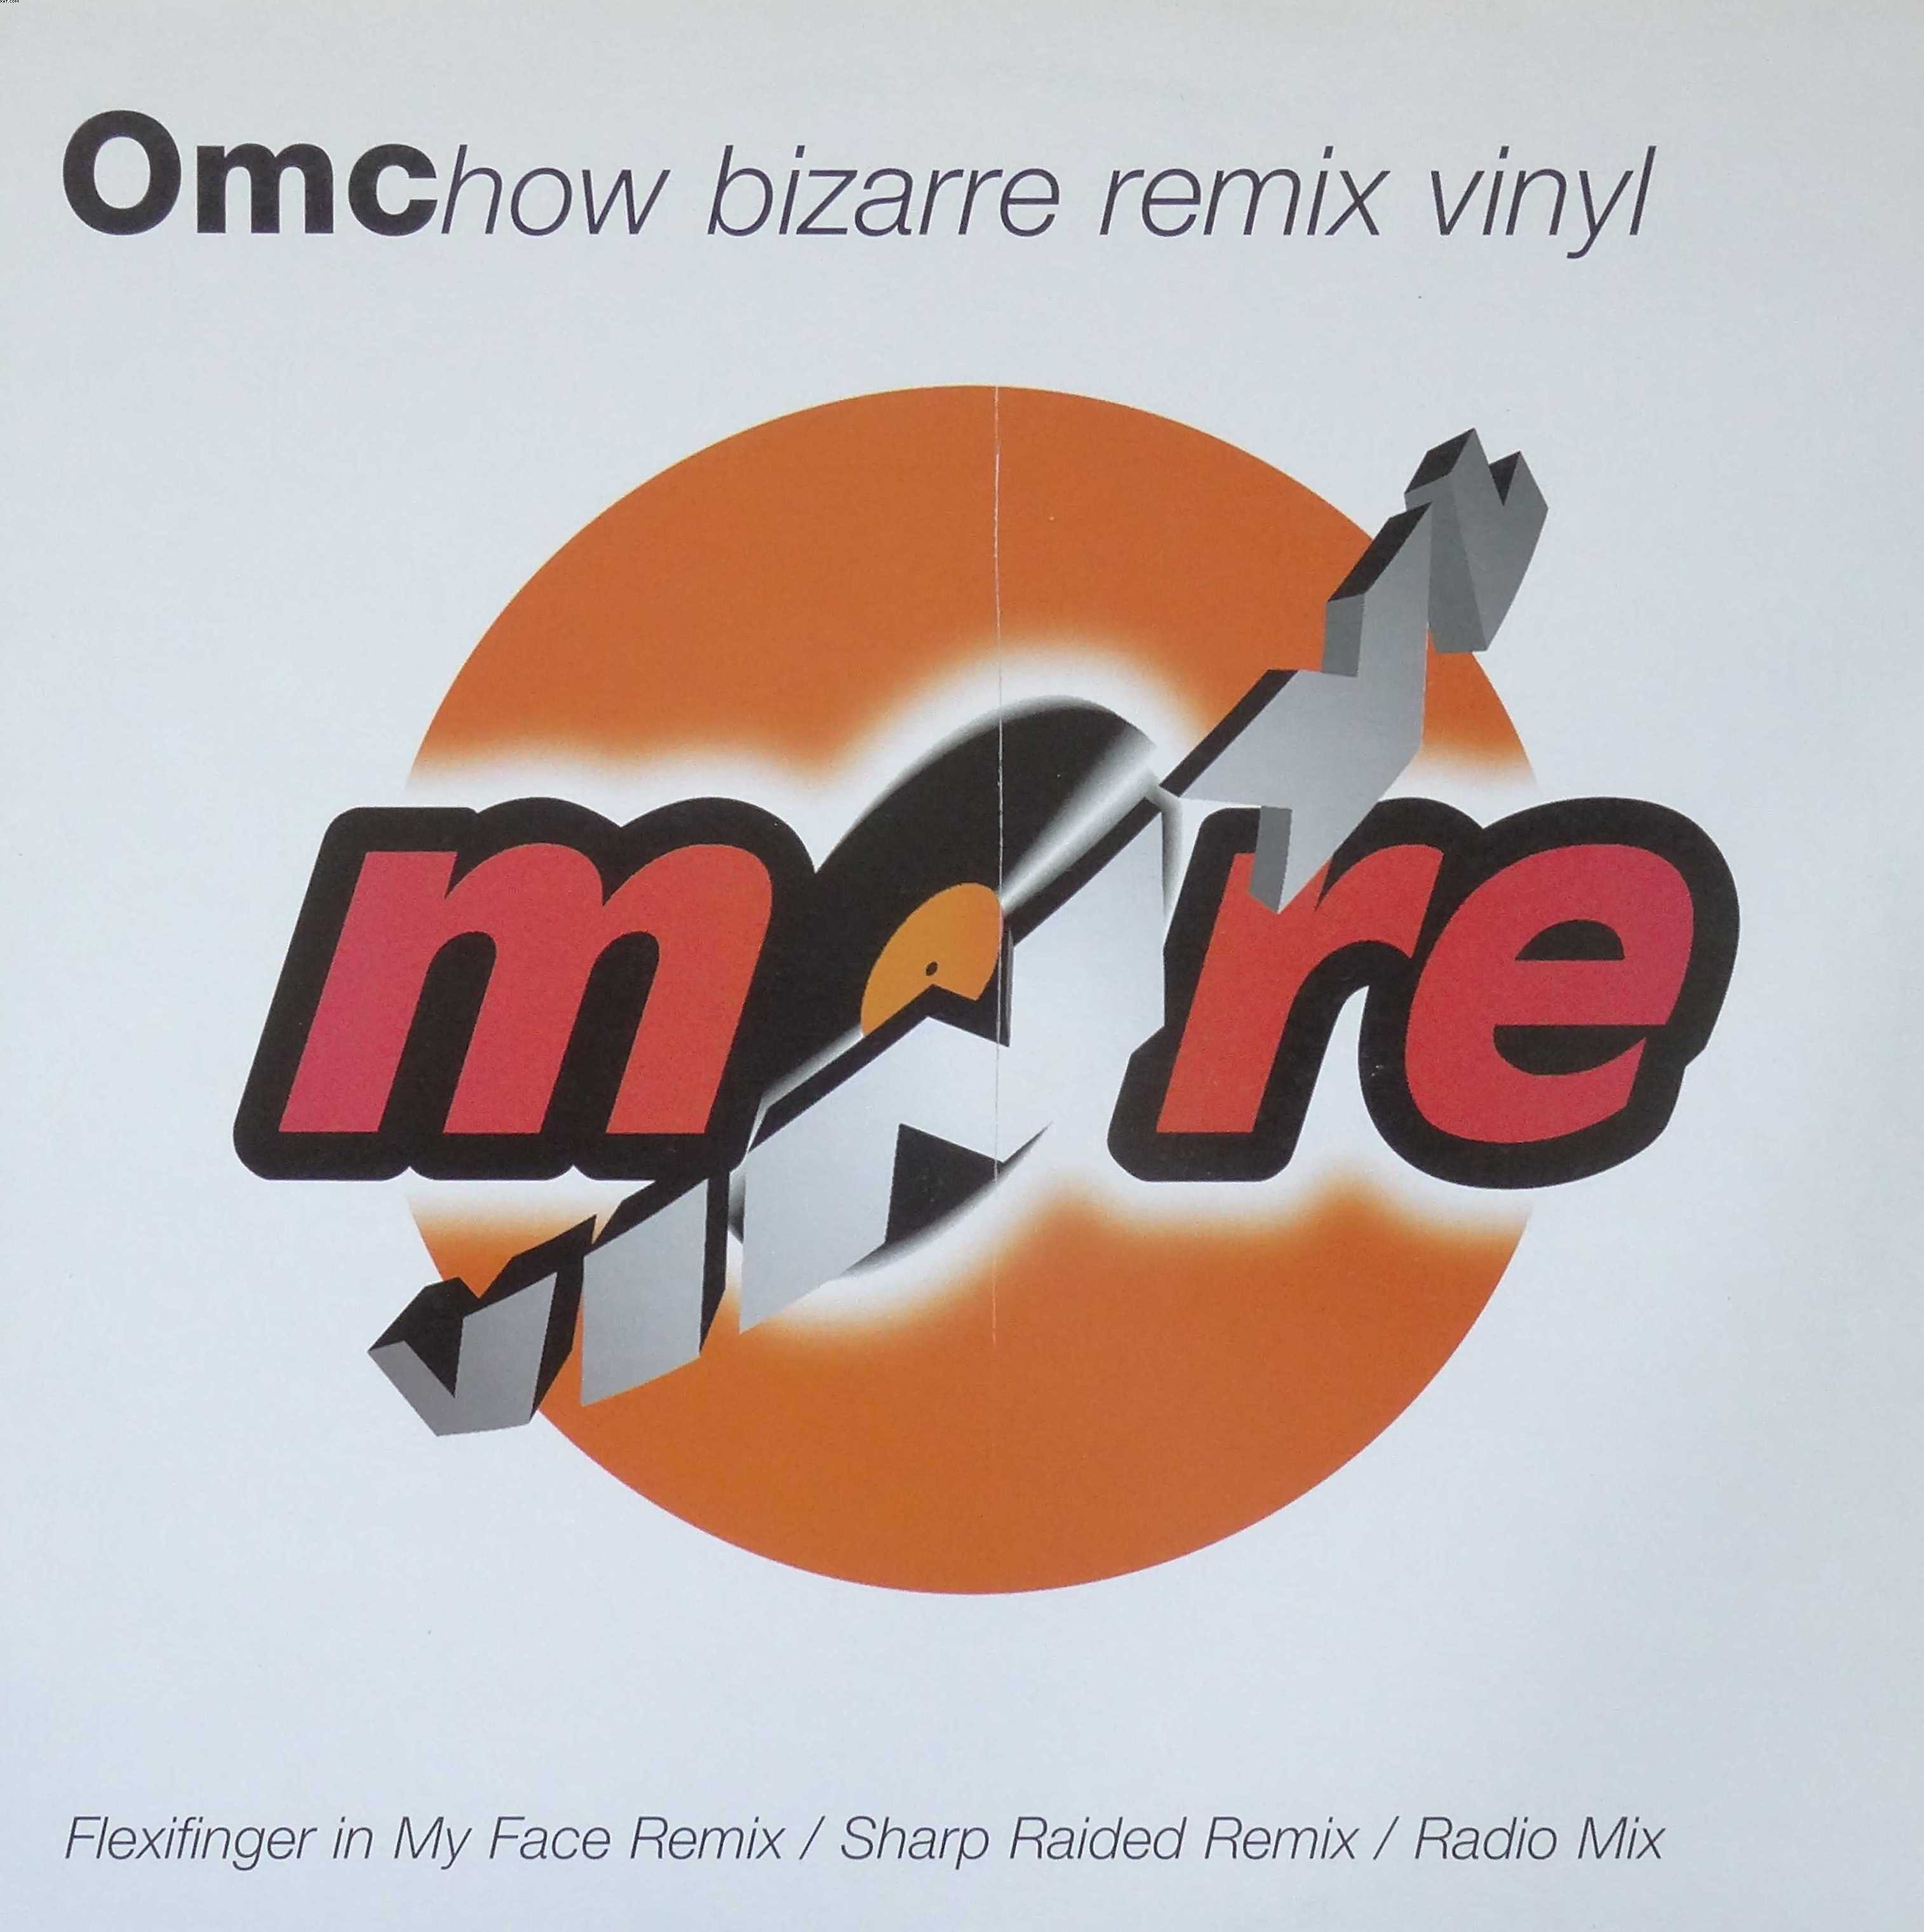 Single CD OMC ‎– How Bizarre Label: Polydor ‎– 575 206-2 Huh Records ‎– 575 